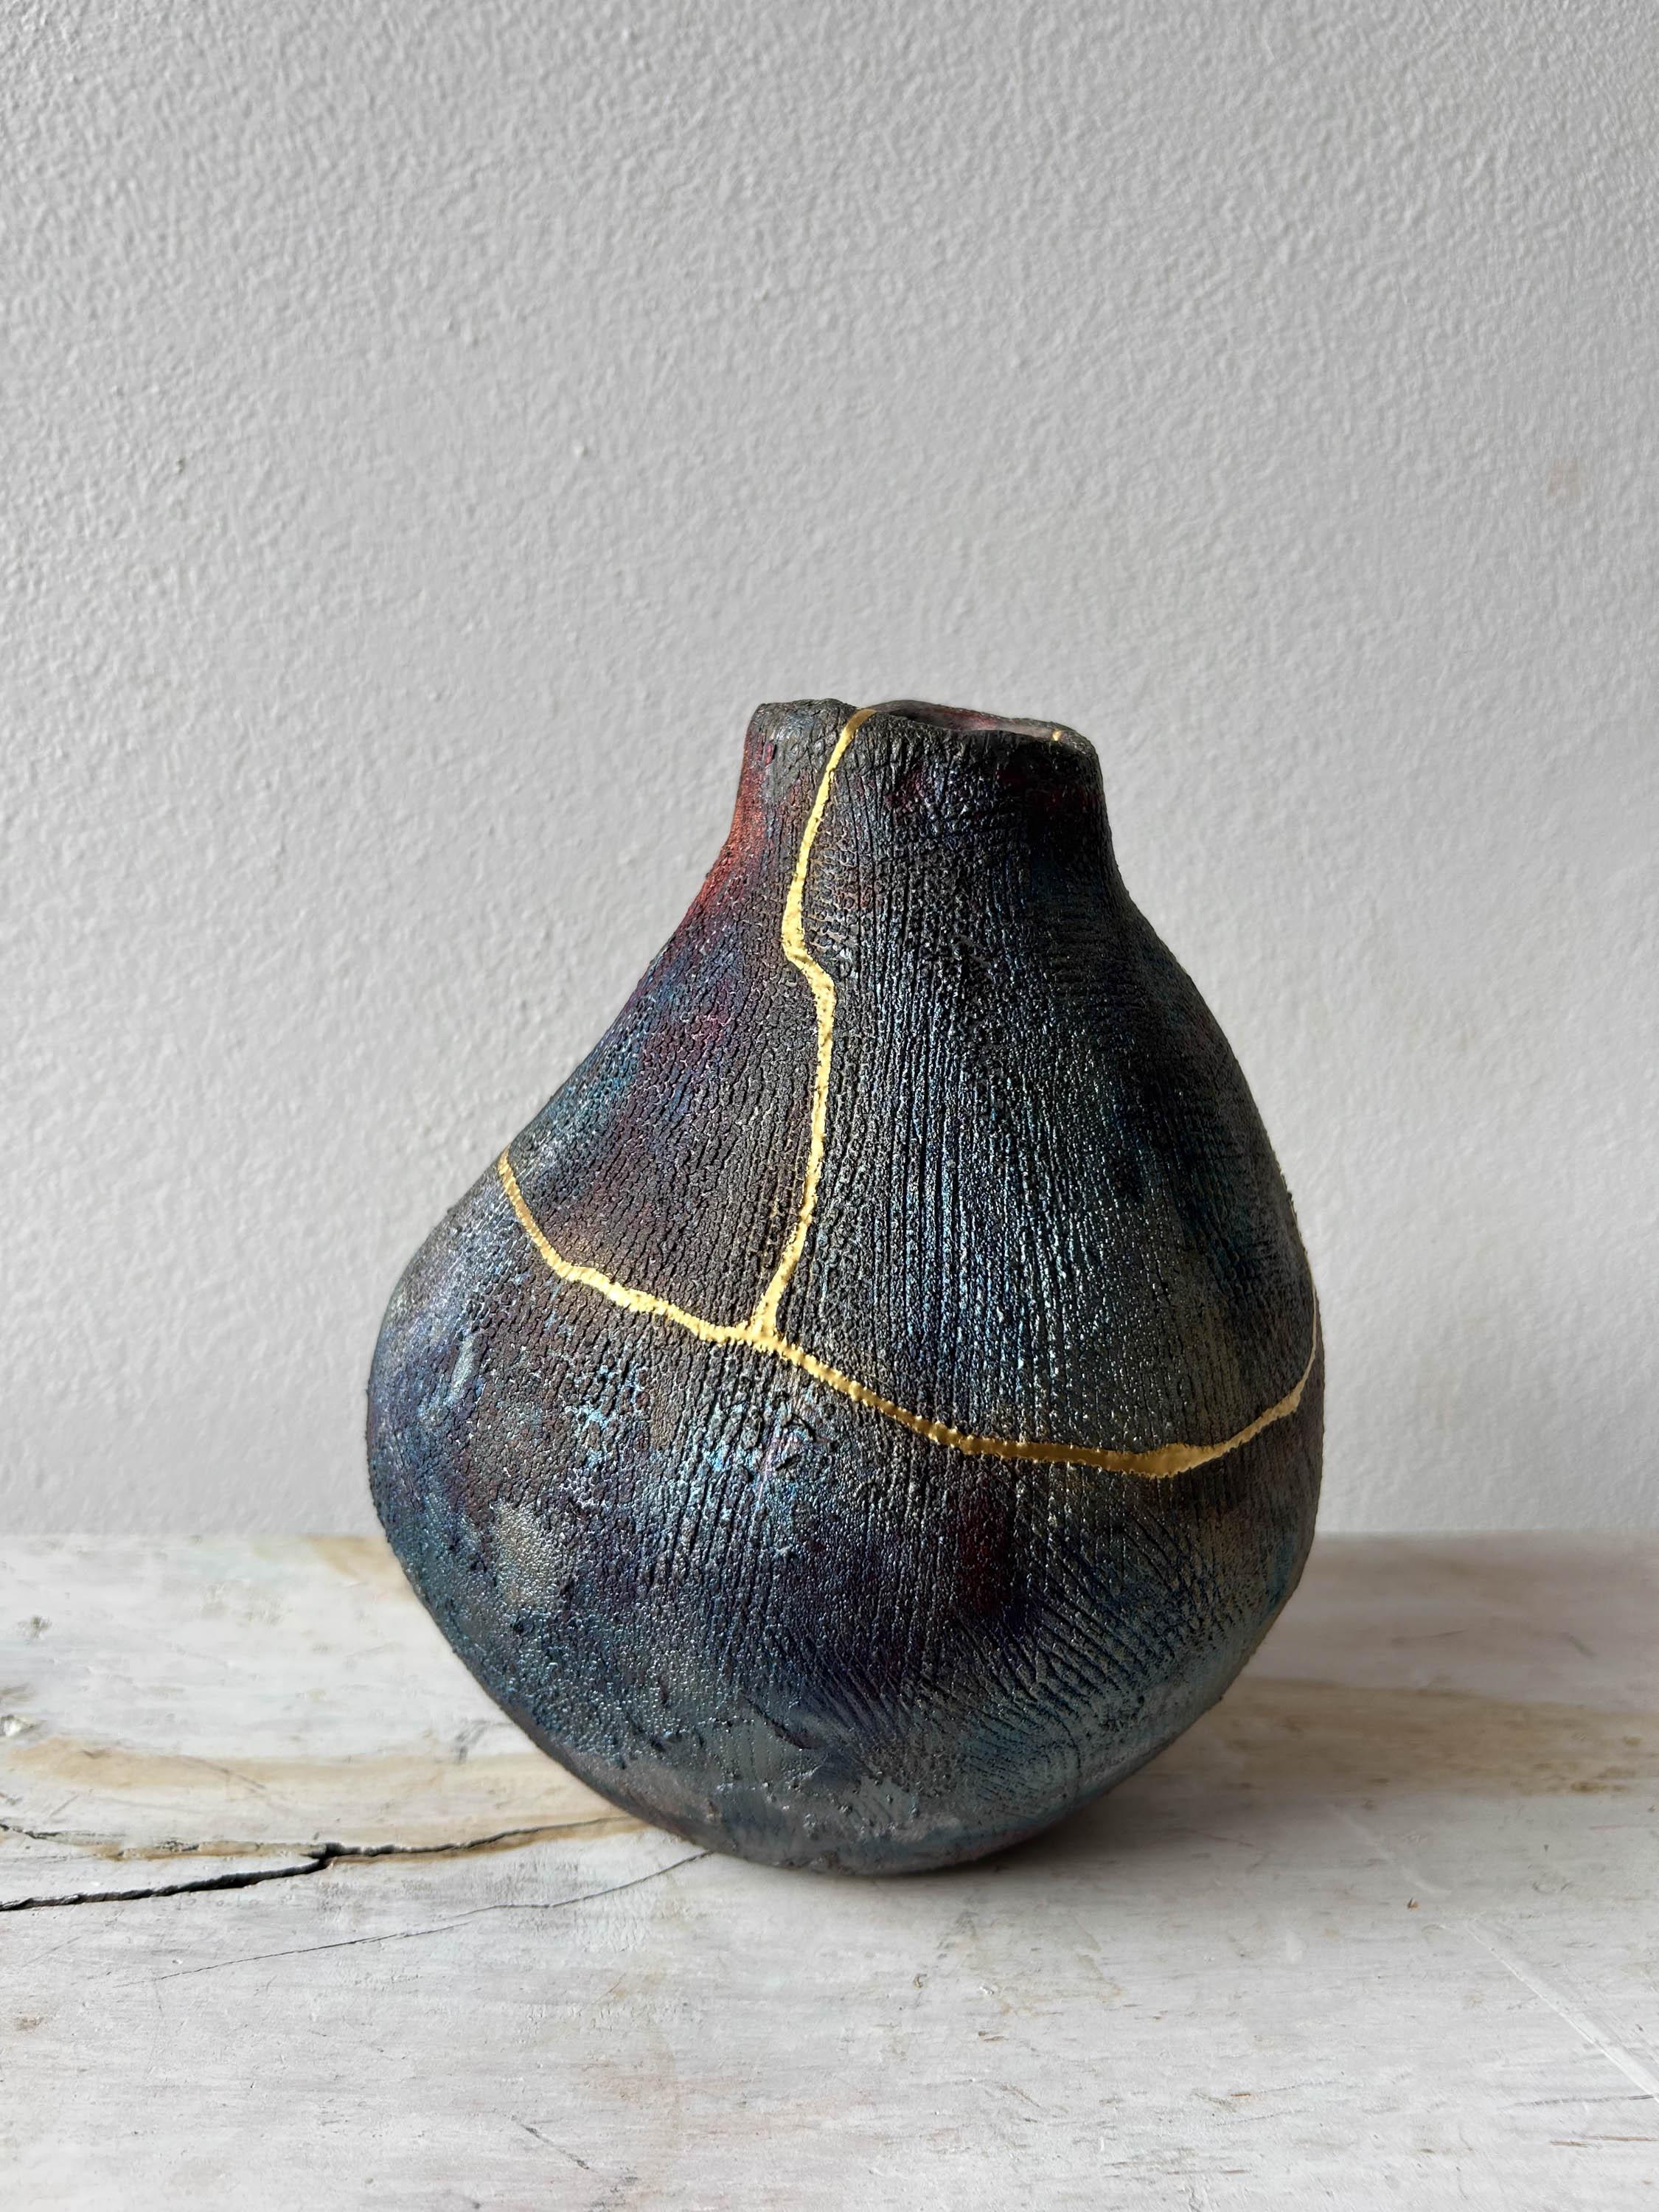 Fired Coil-built Iridescent Vase with 24 Karat Gold Kintsugi Repair